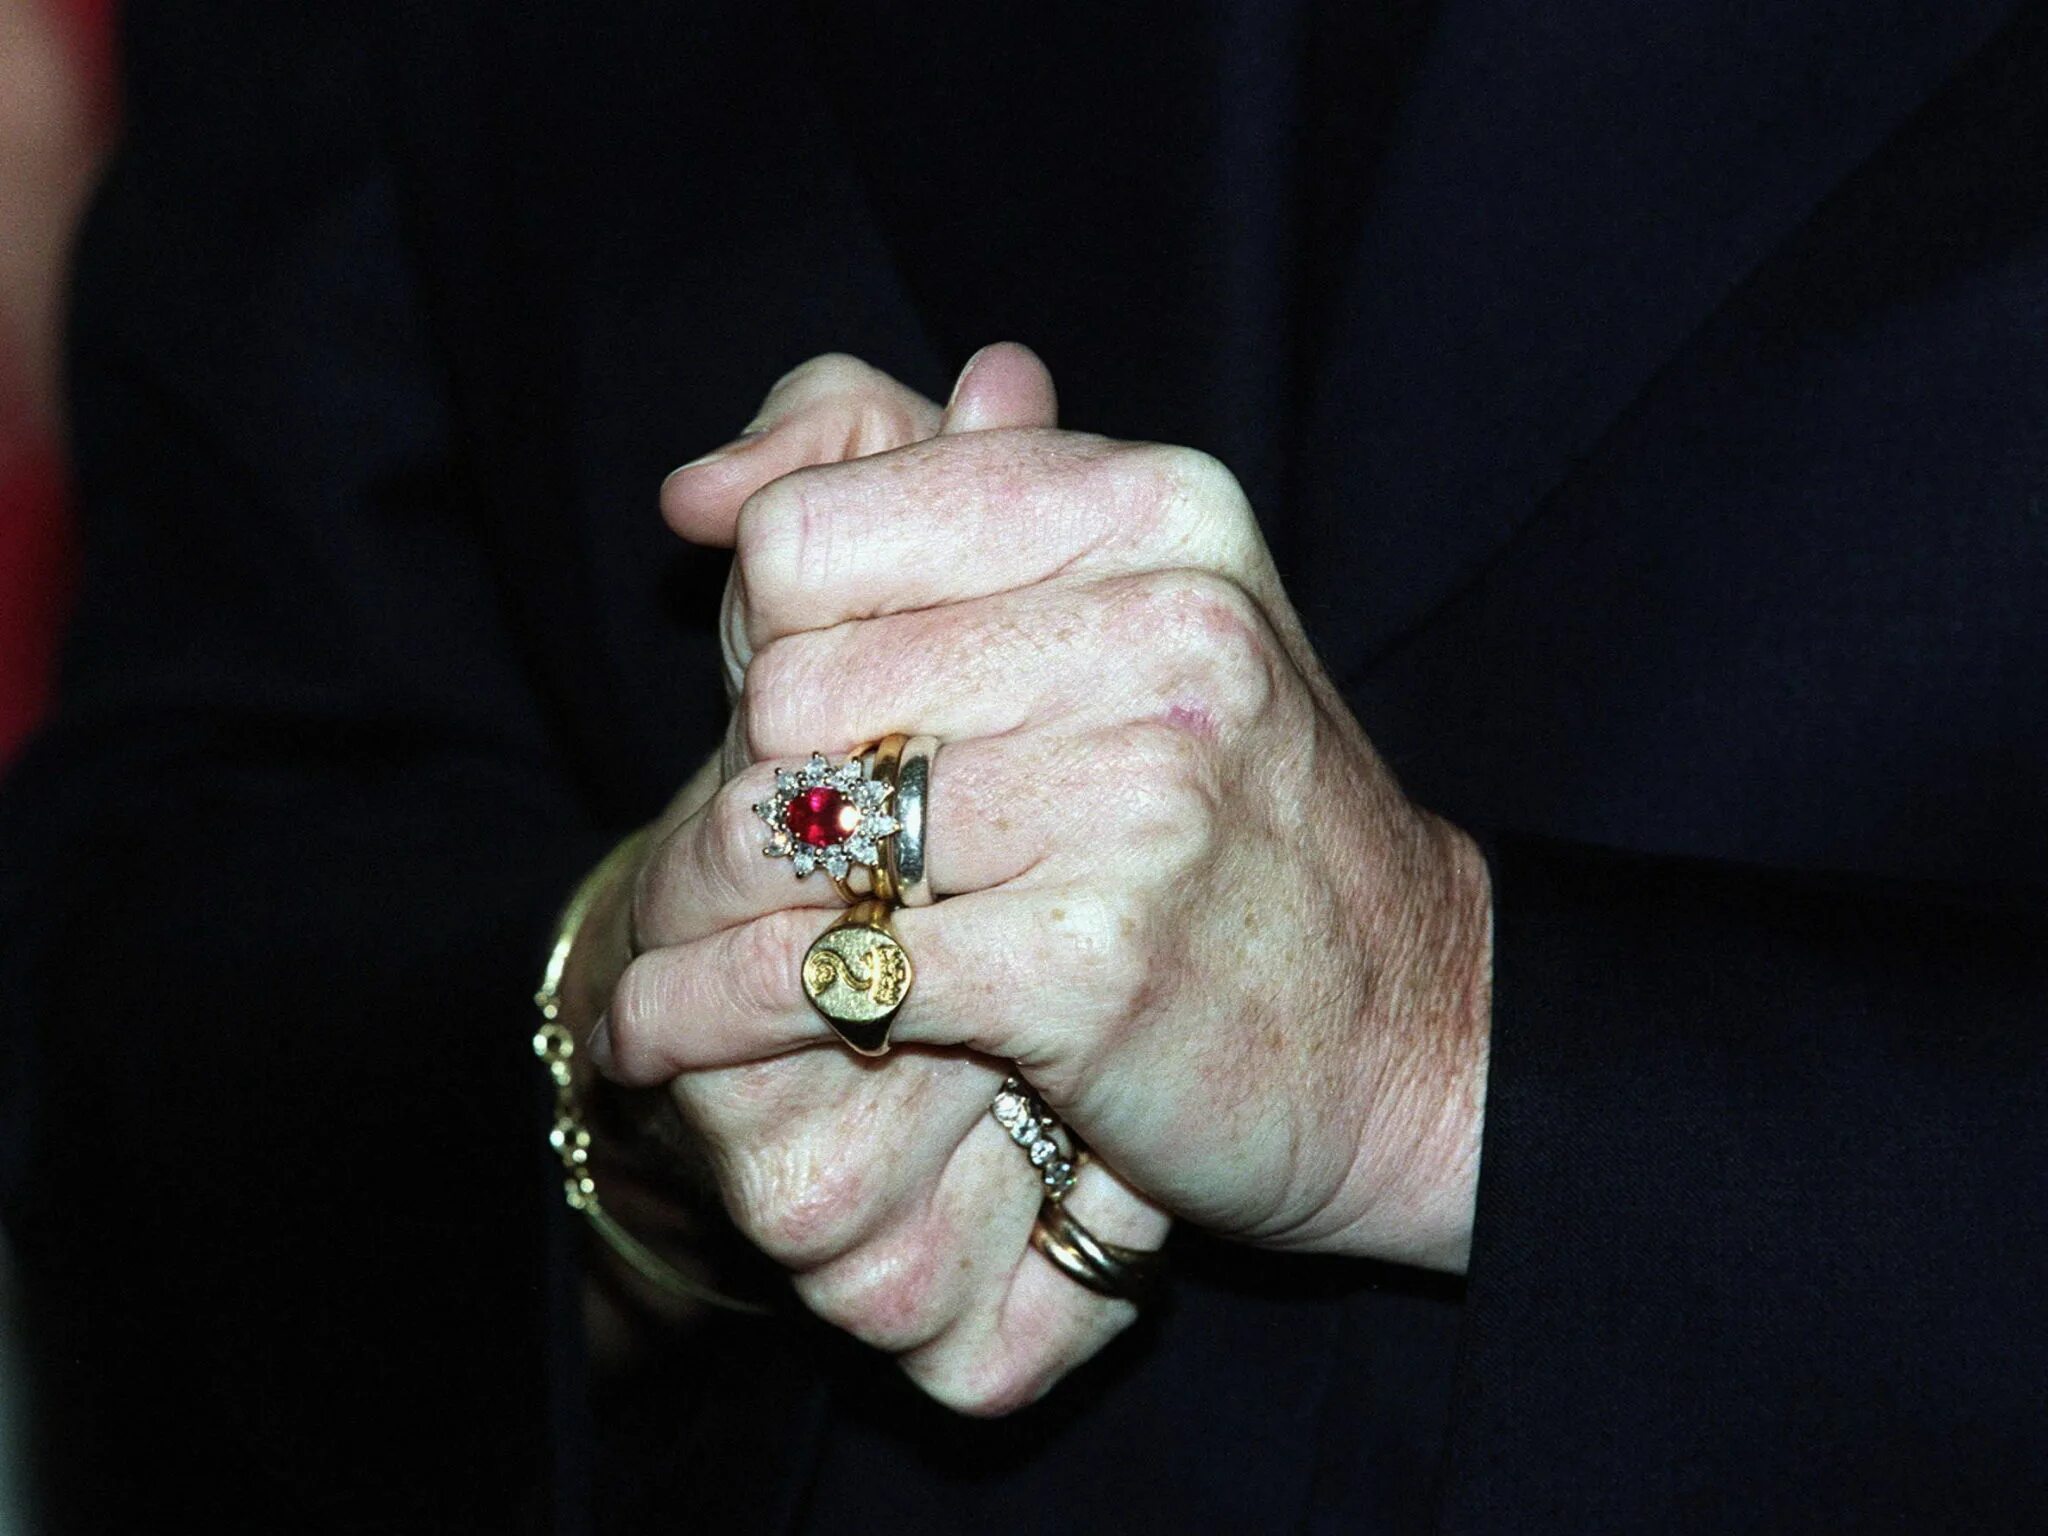 На какой руке пальце носят печатку. Перстень на мизинце Тони сопрано. Кольцо у Михалкова на мизинце. Кольца на руке Никиты Михалкова. Кольцо сола Гудмана на мизинце.